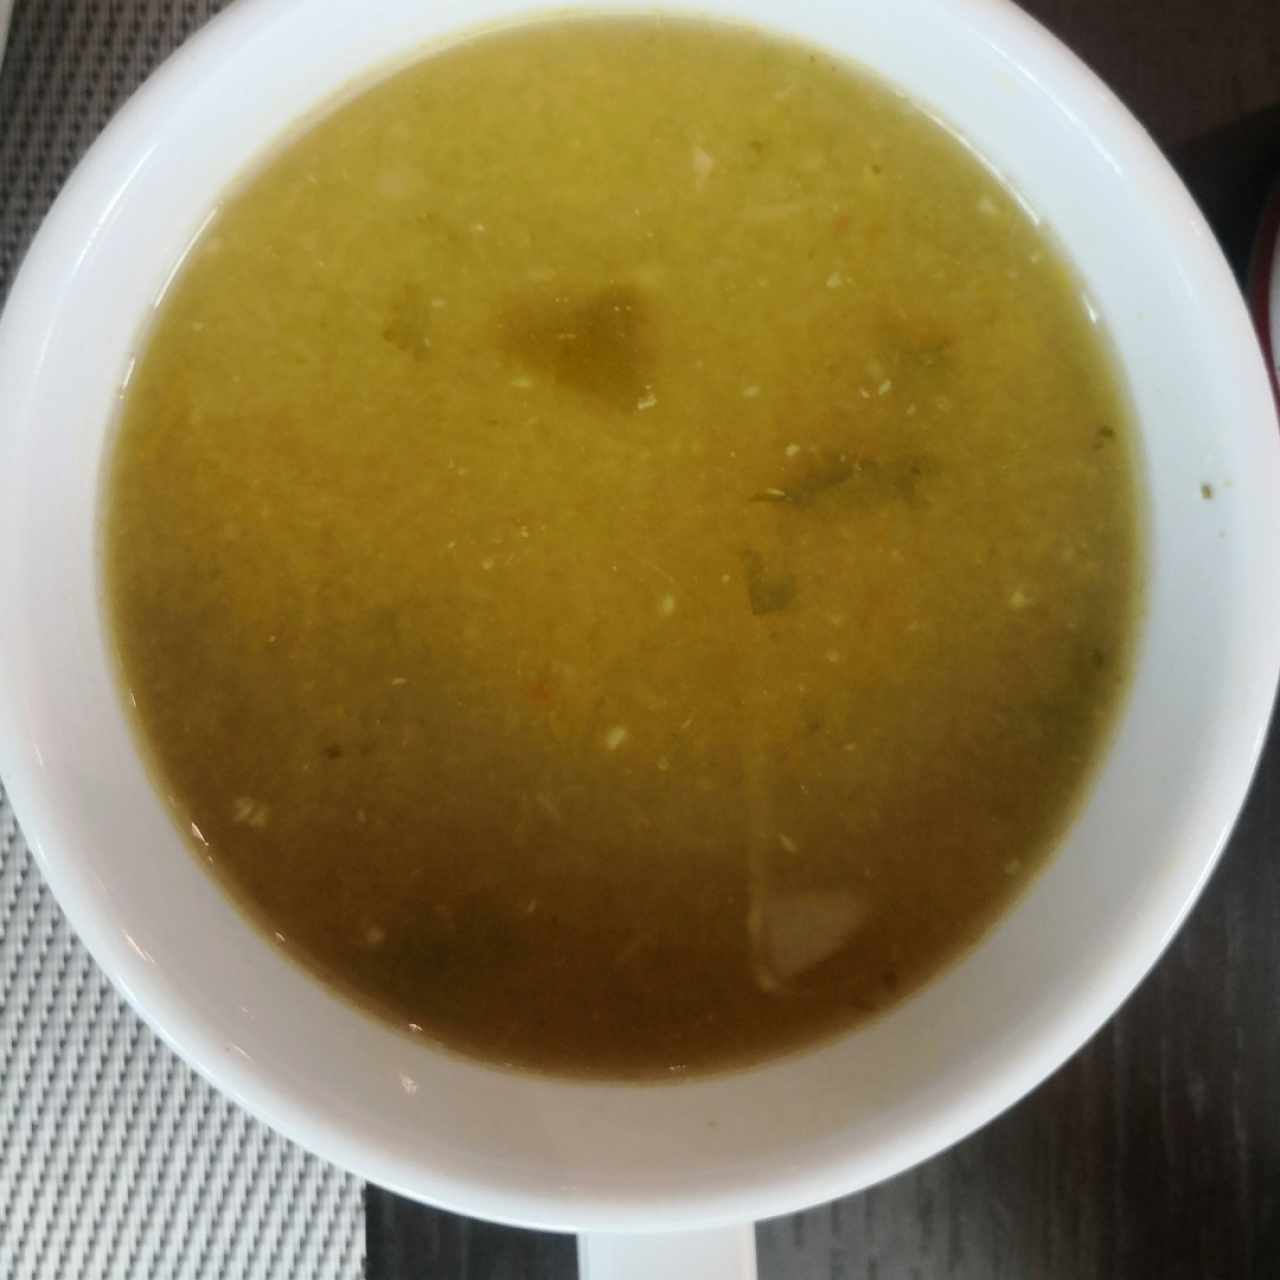 sopa de pollo